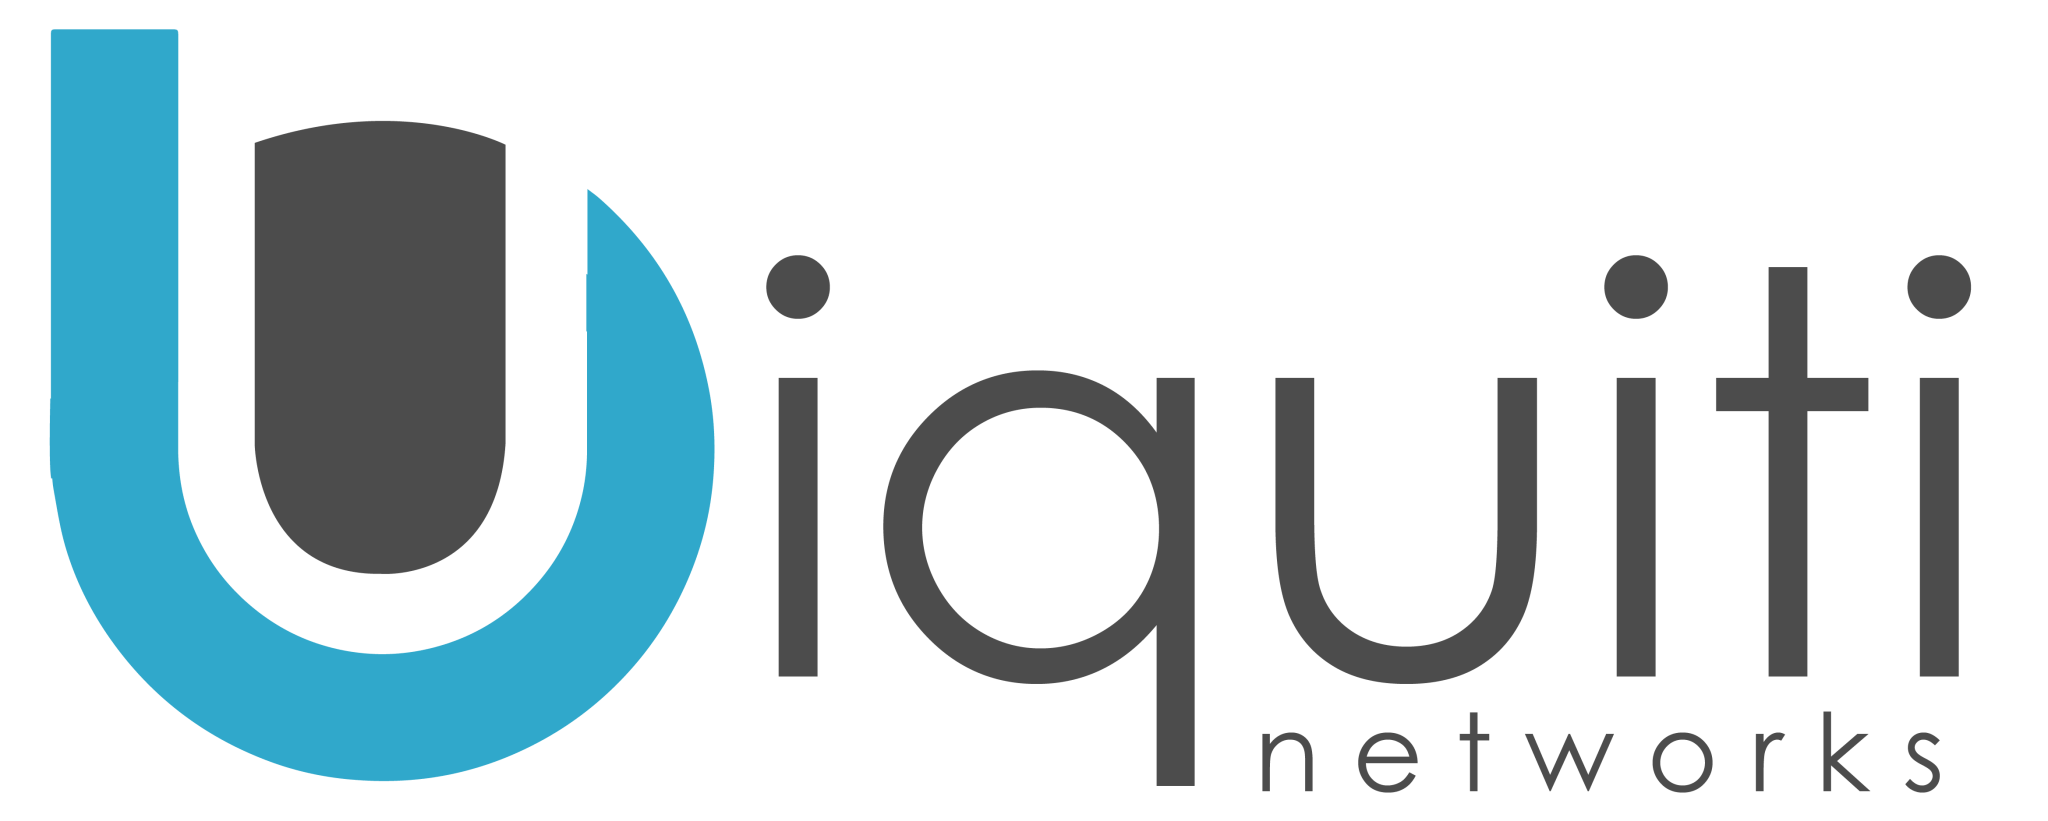 https://kotoritechnologies.com/wp-content/uploads/2020/03/logo-ubiquiti-01.png